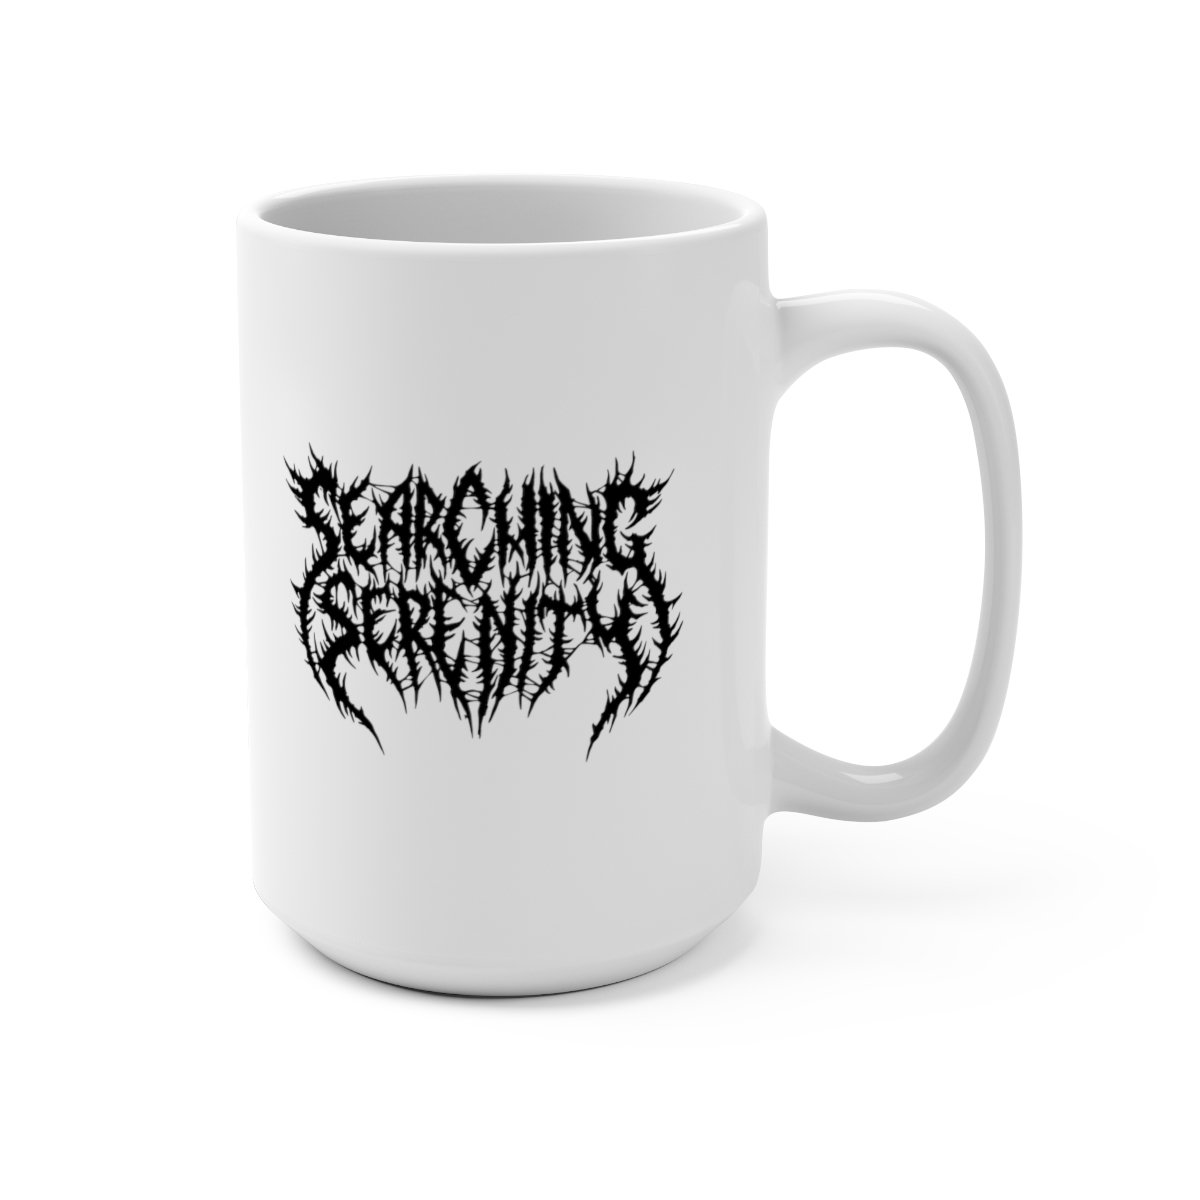 Searching Serenity – 15oz White Mug